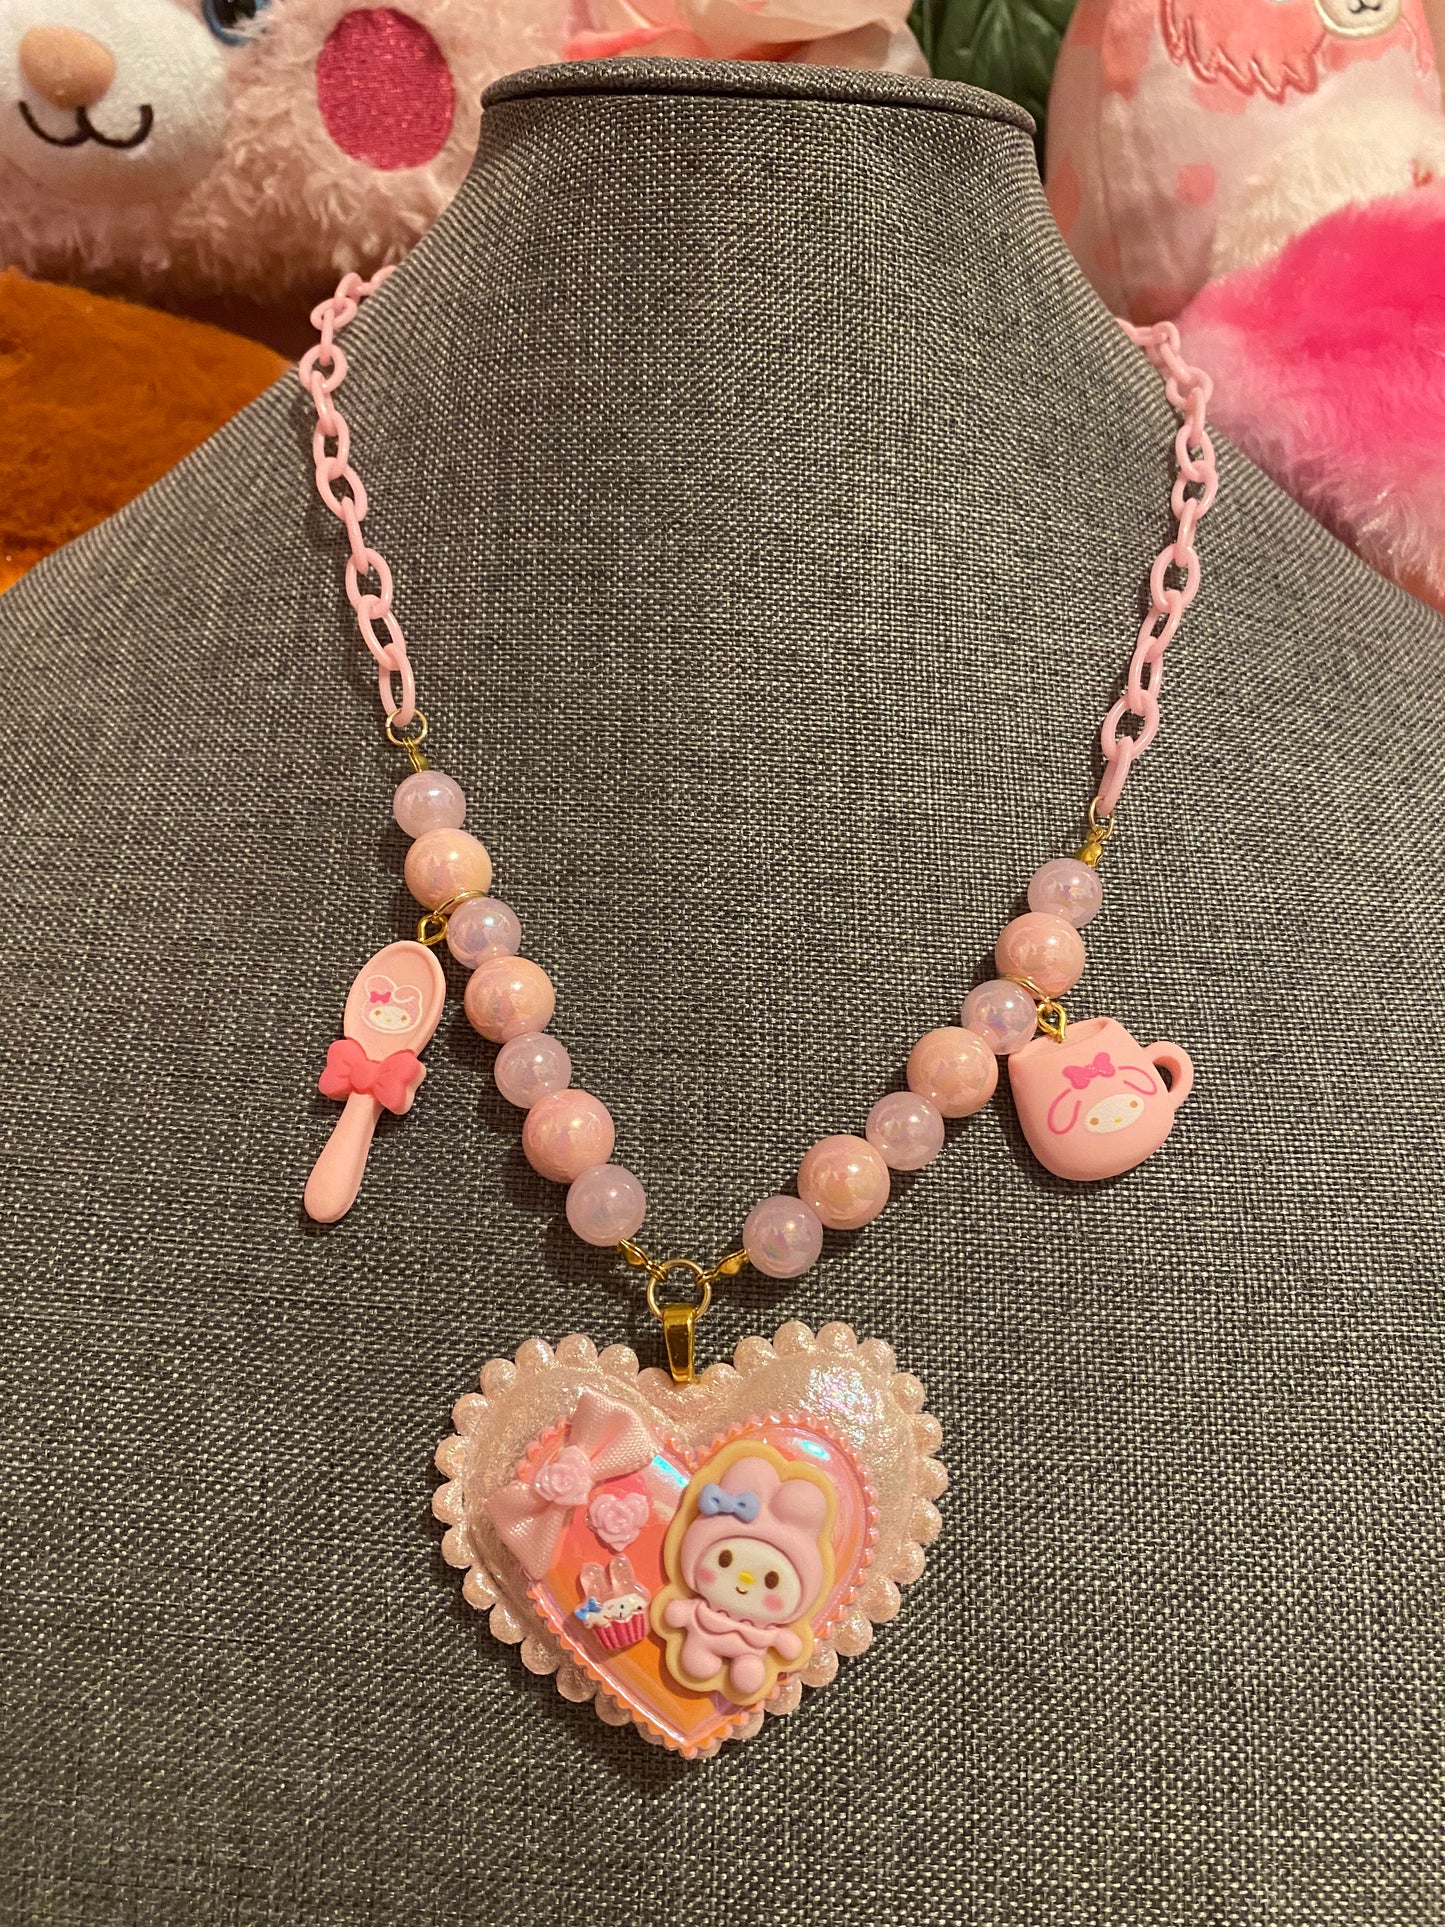 Bunny Cafe Necklace